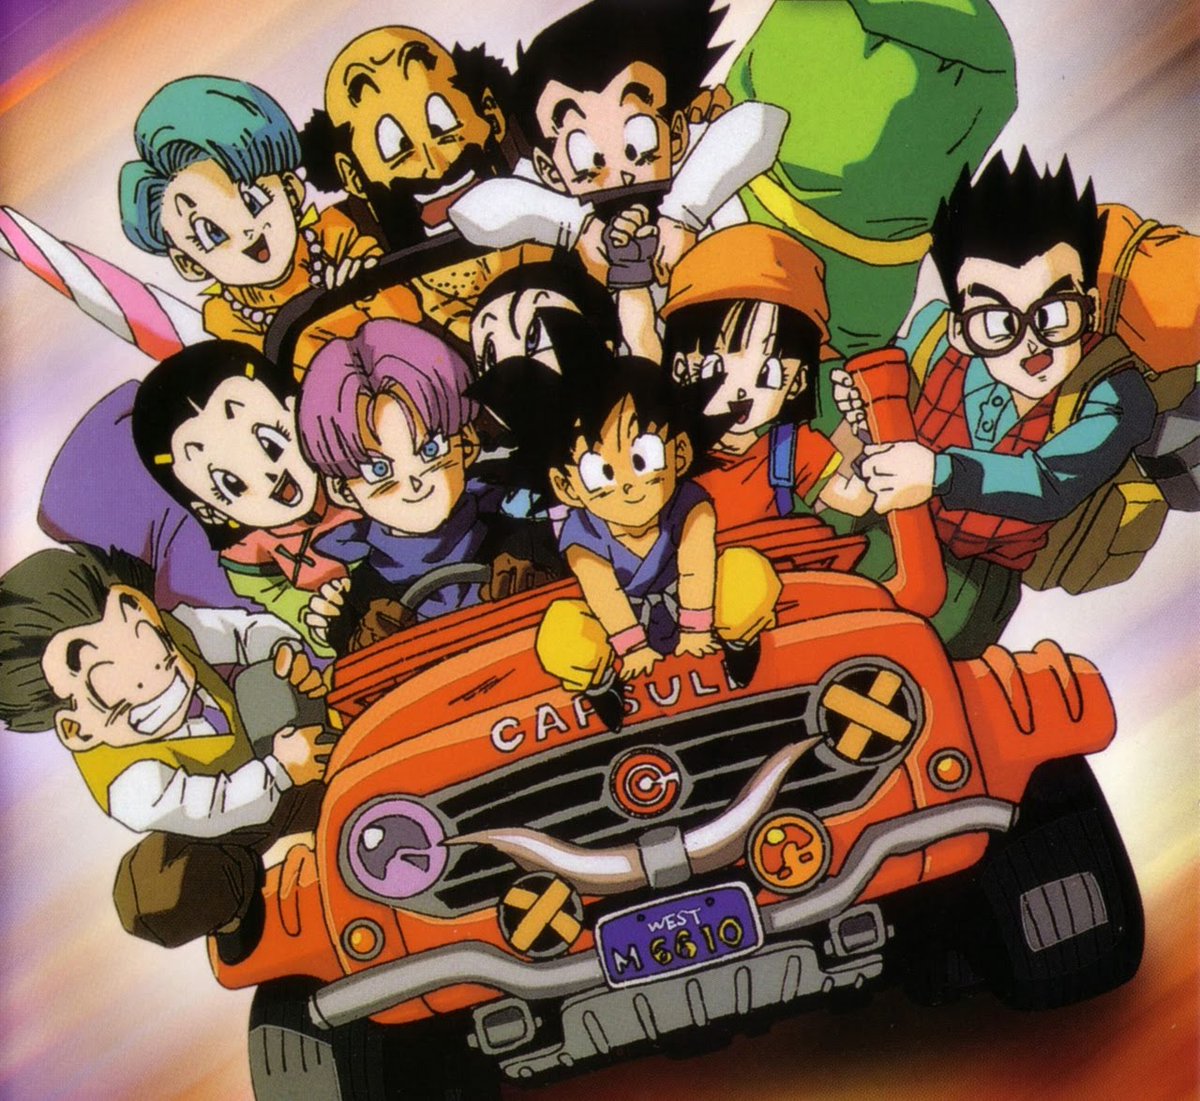 Dragon Ball GT Retro 90s Art

Dragon GT Team - CM Title Card

#DragonBallZ #Dbz #Retro #Shueisha #Toeianimation #vintage #90sanimestyle #Goku #MajinBuuSaga